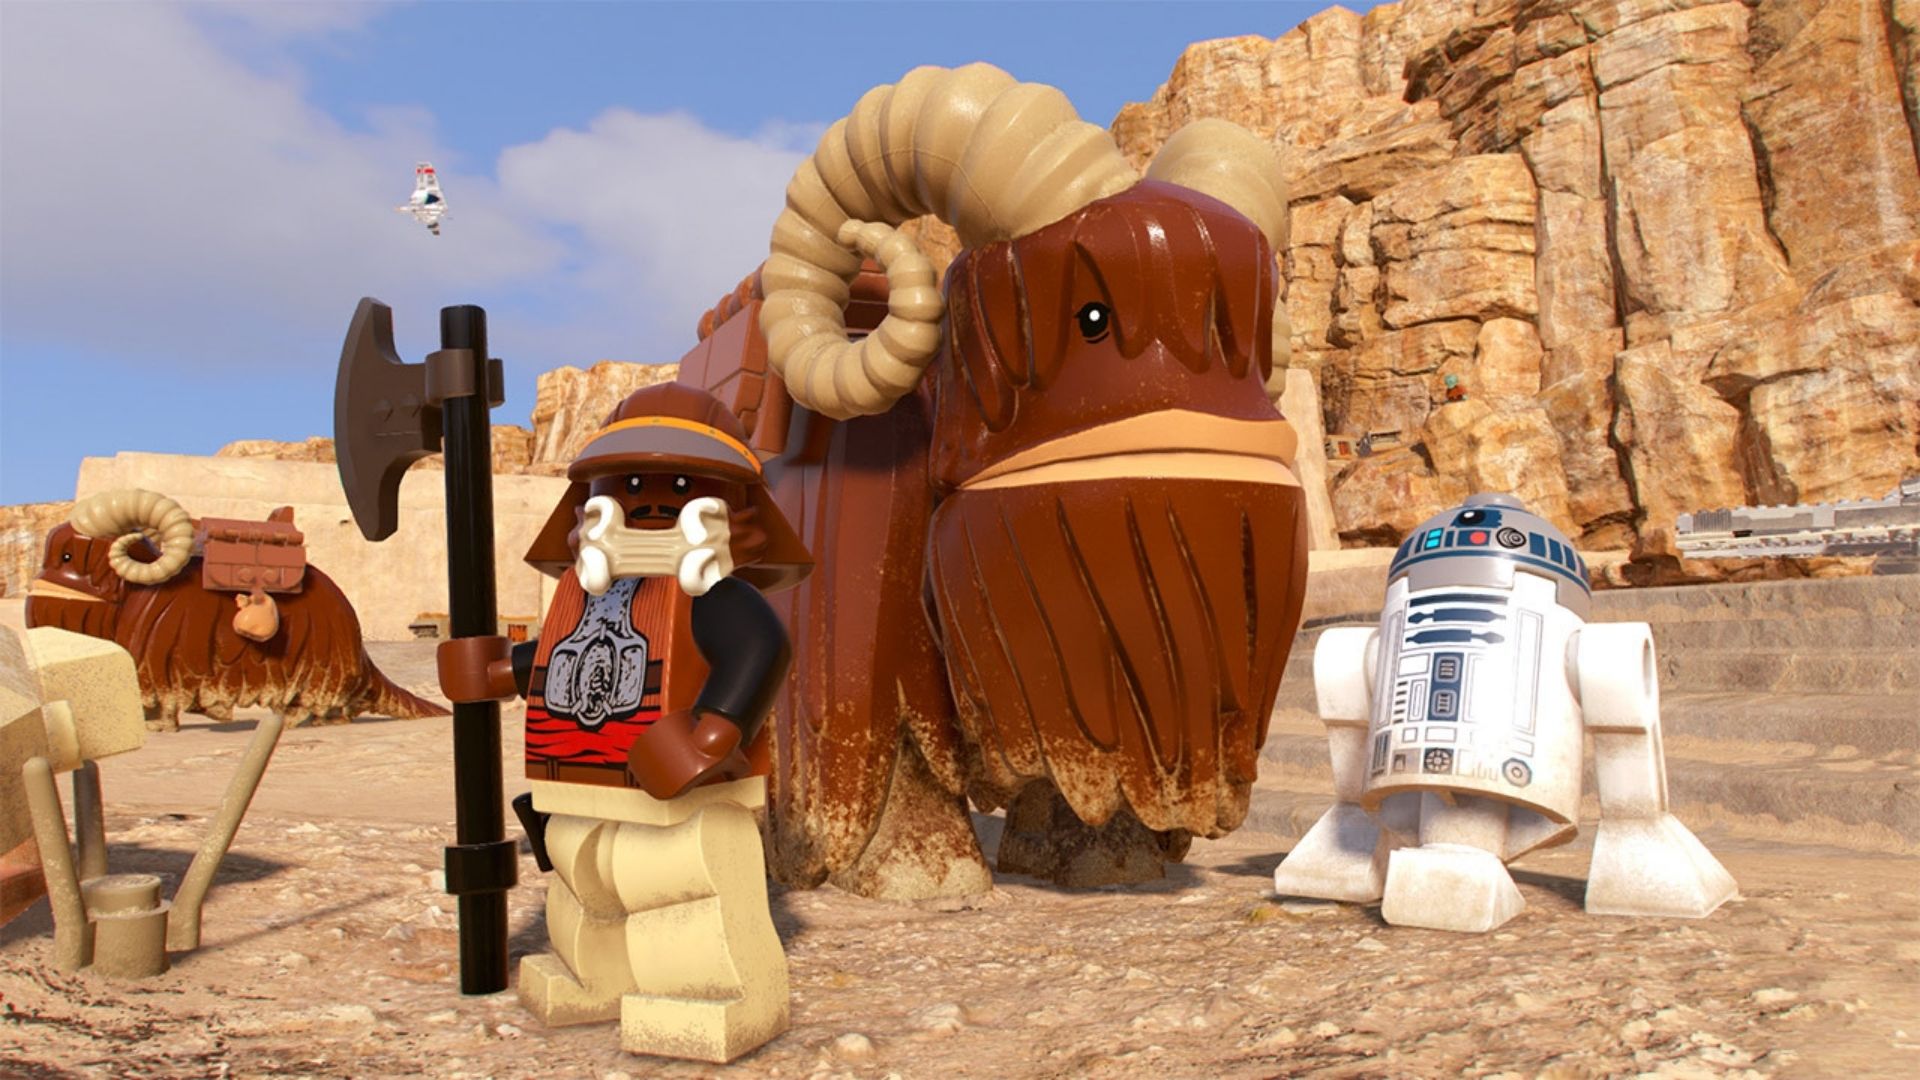 All Lego Star Wars The Skywalker Saga characters